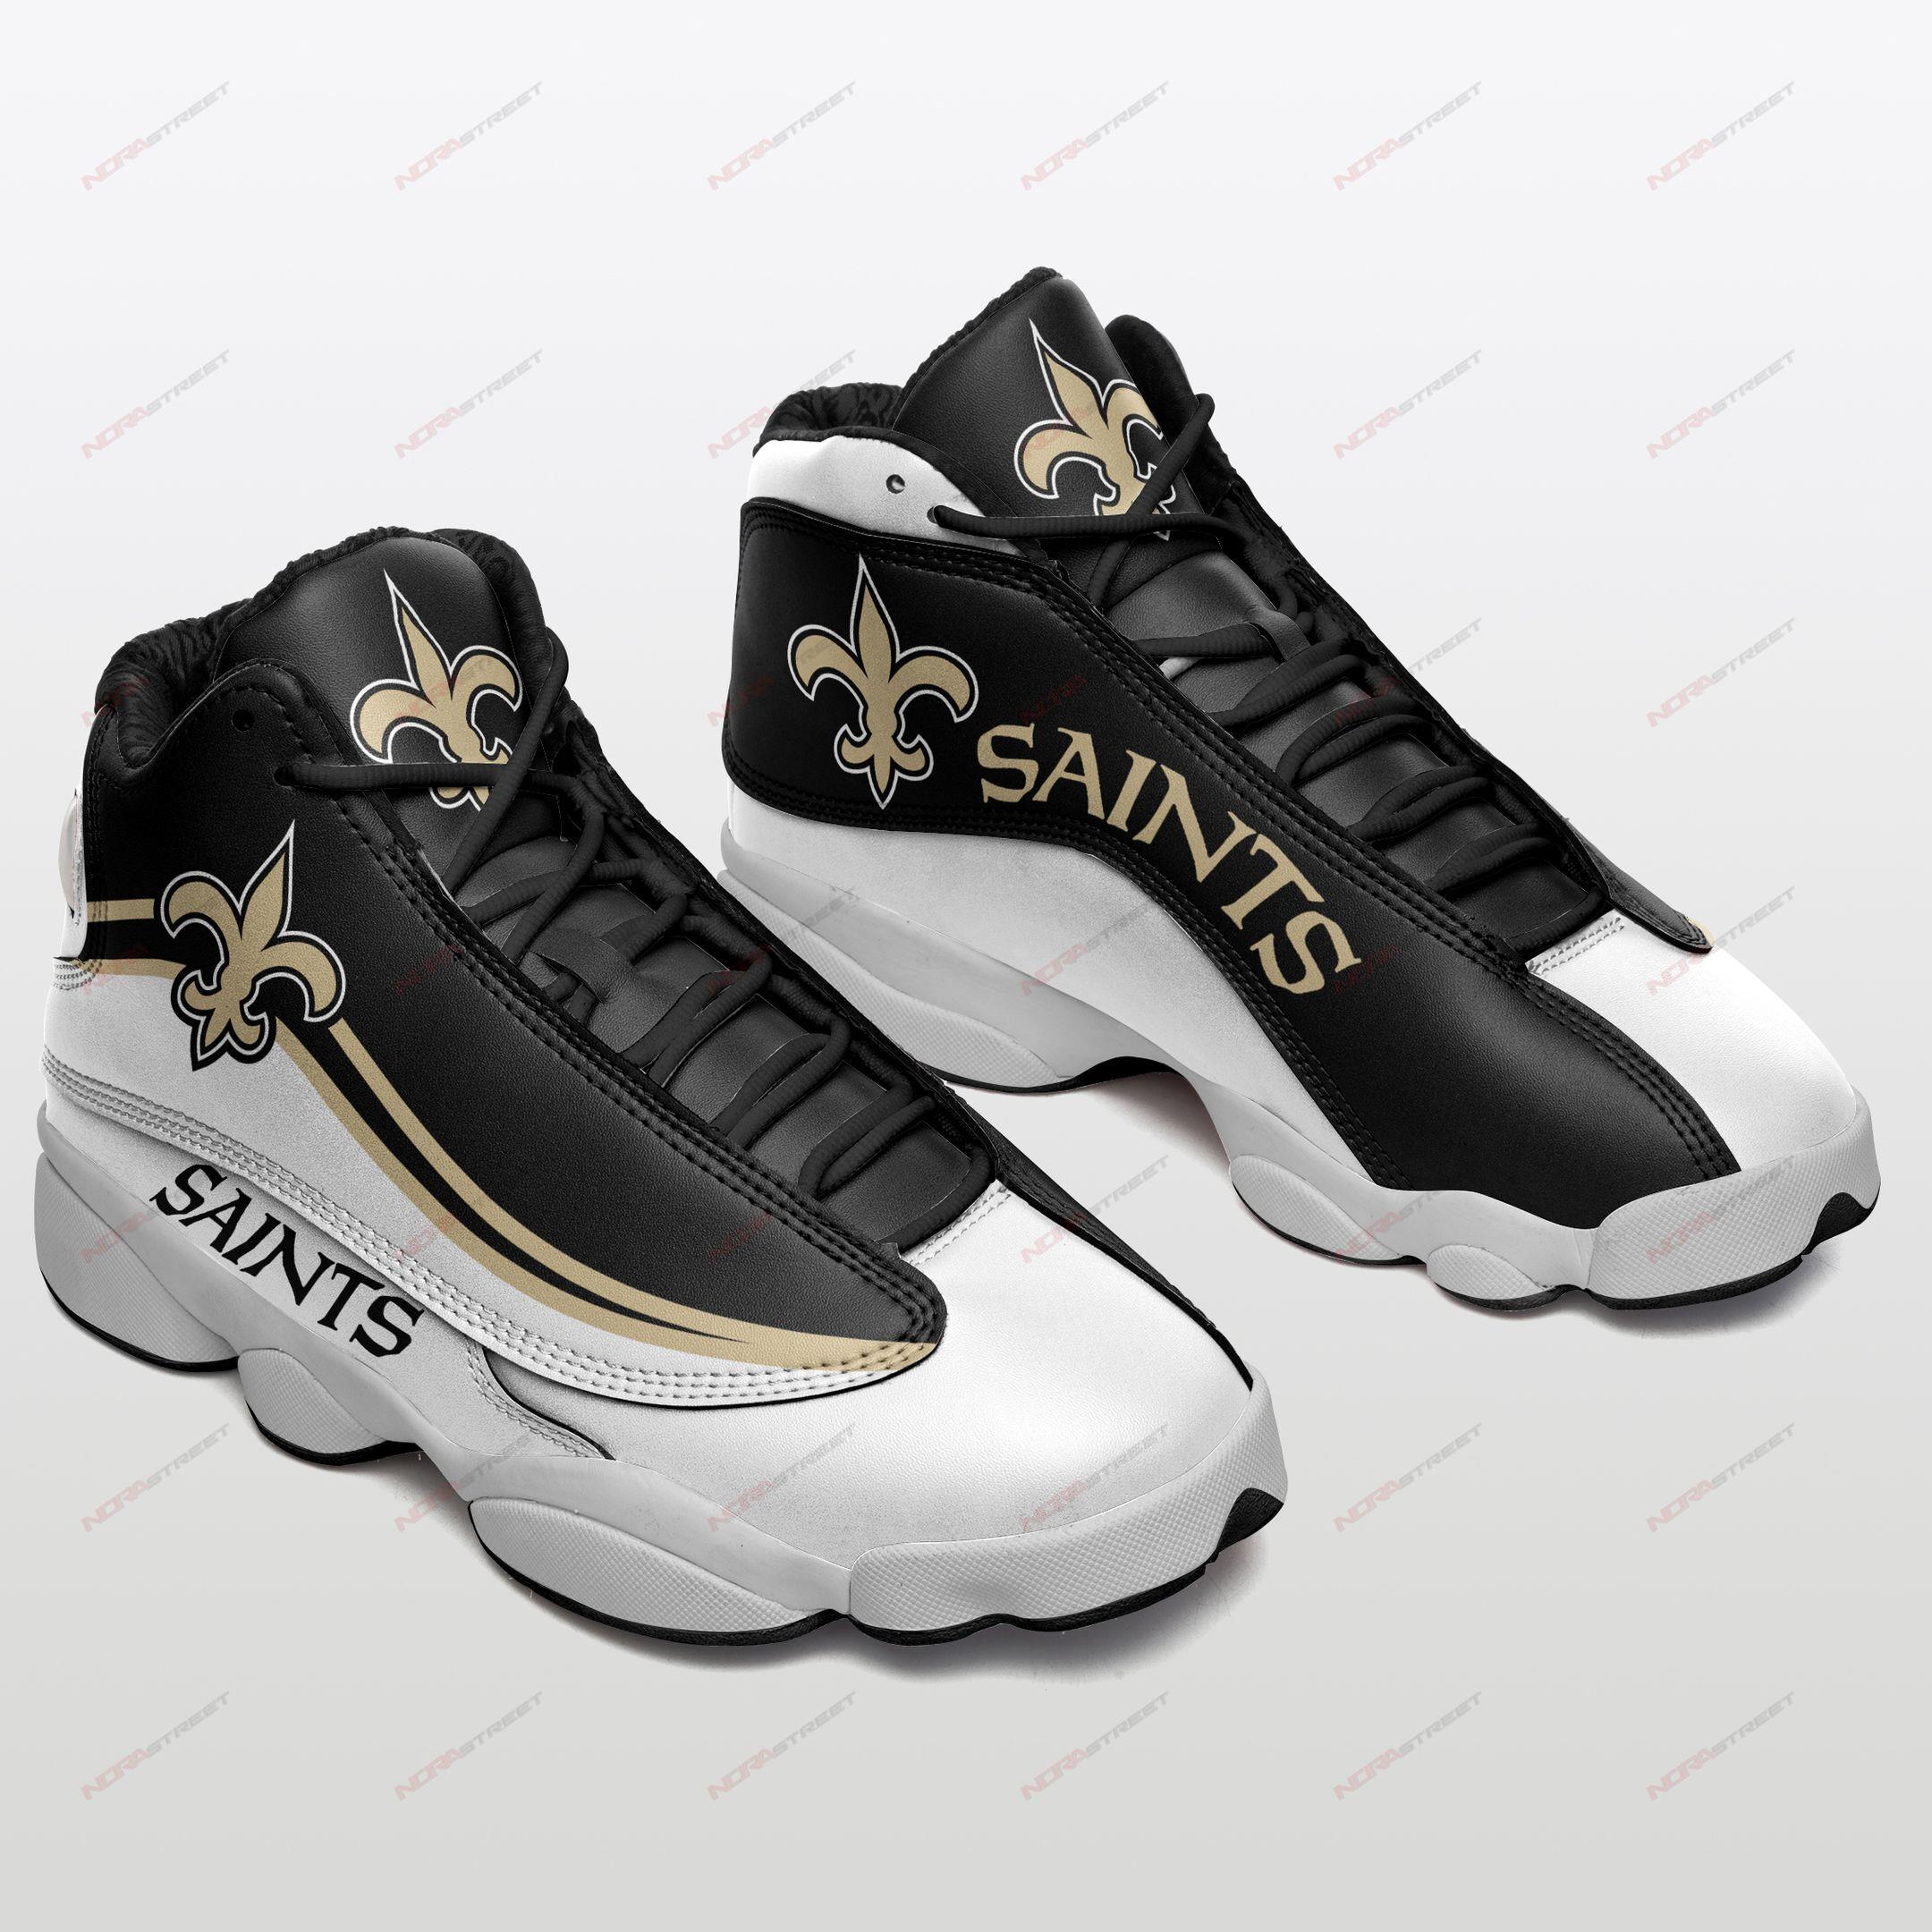 New Orleans Saints Air Jordan 13 Sneakers Sport Shoes - Luxwoo.com